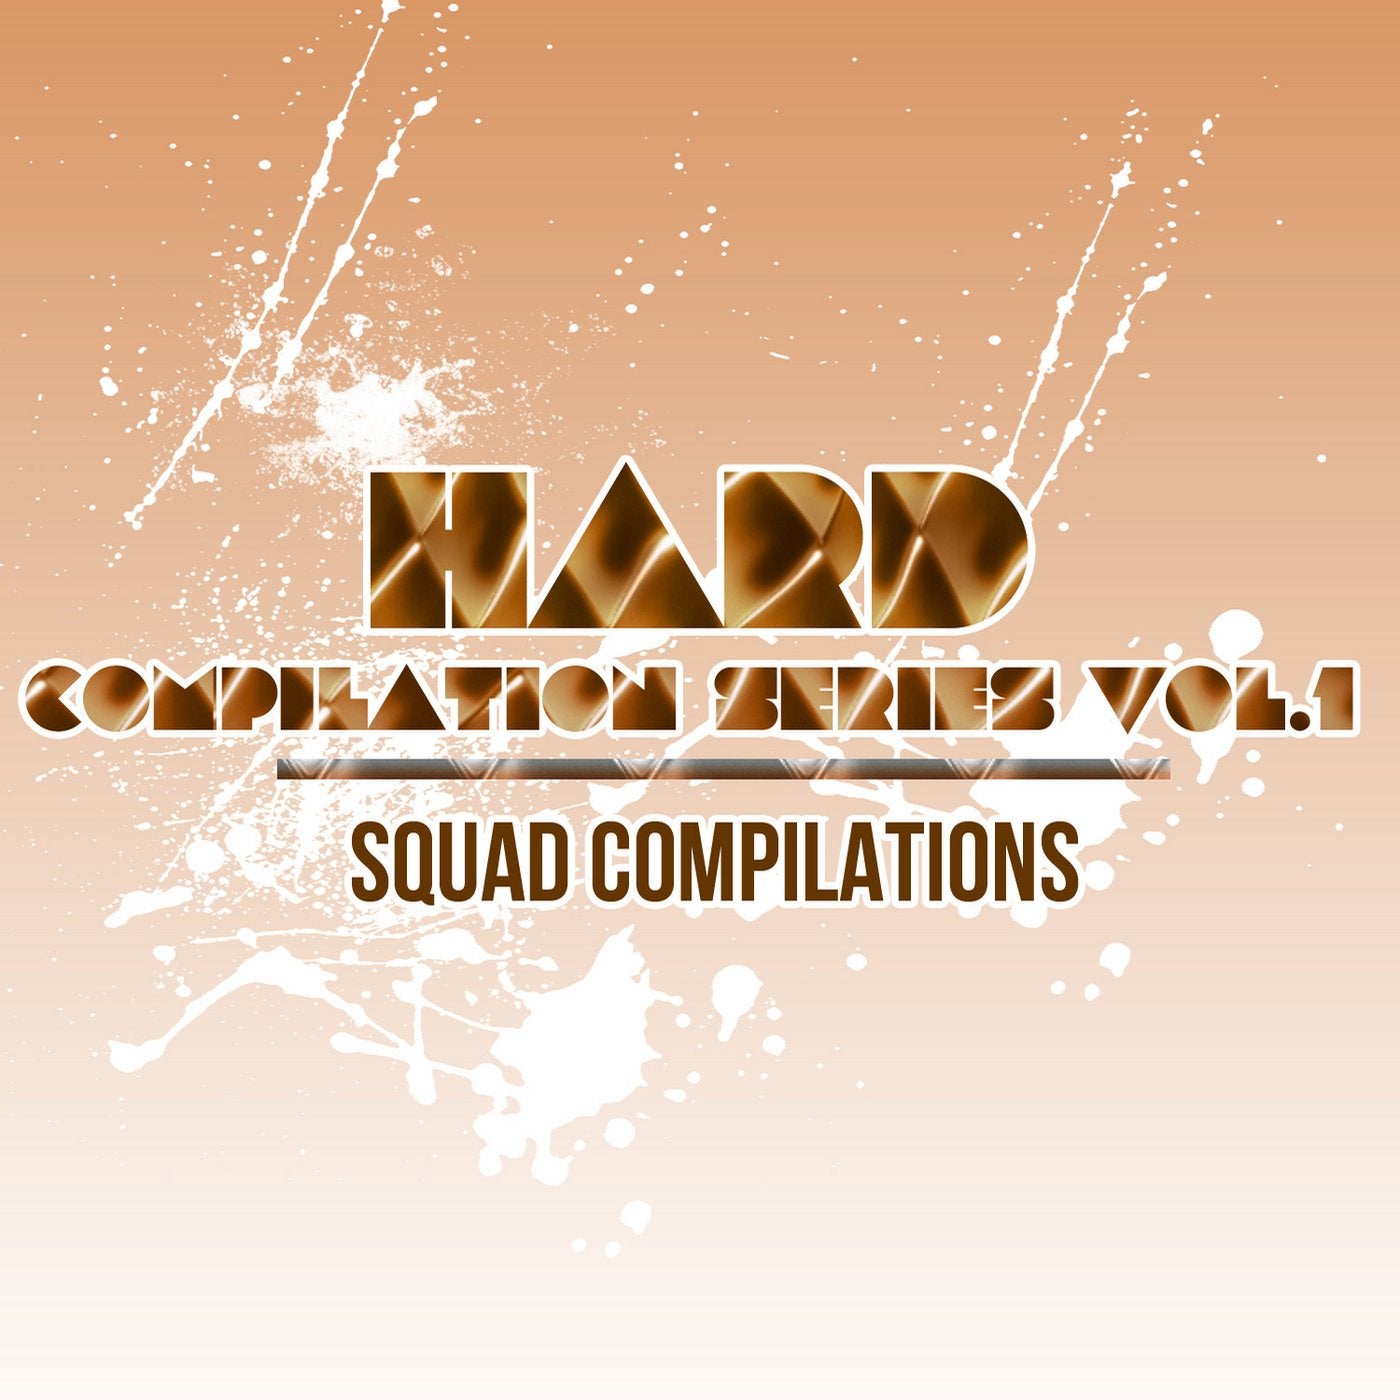 Hard Compilation Series Vol. 1